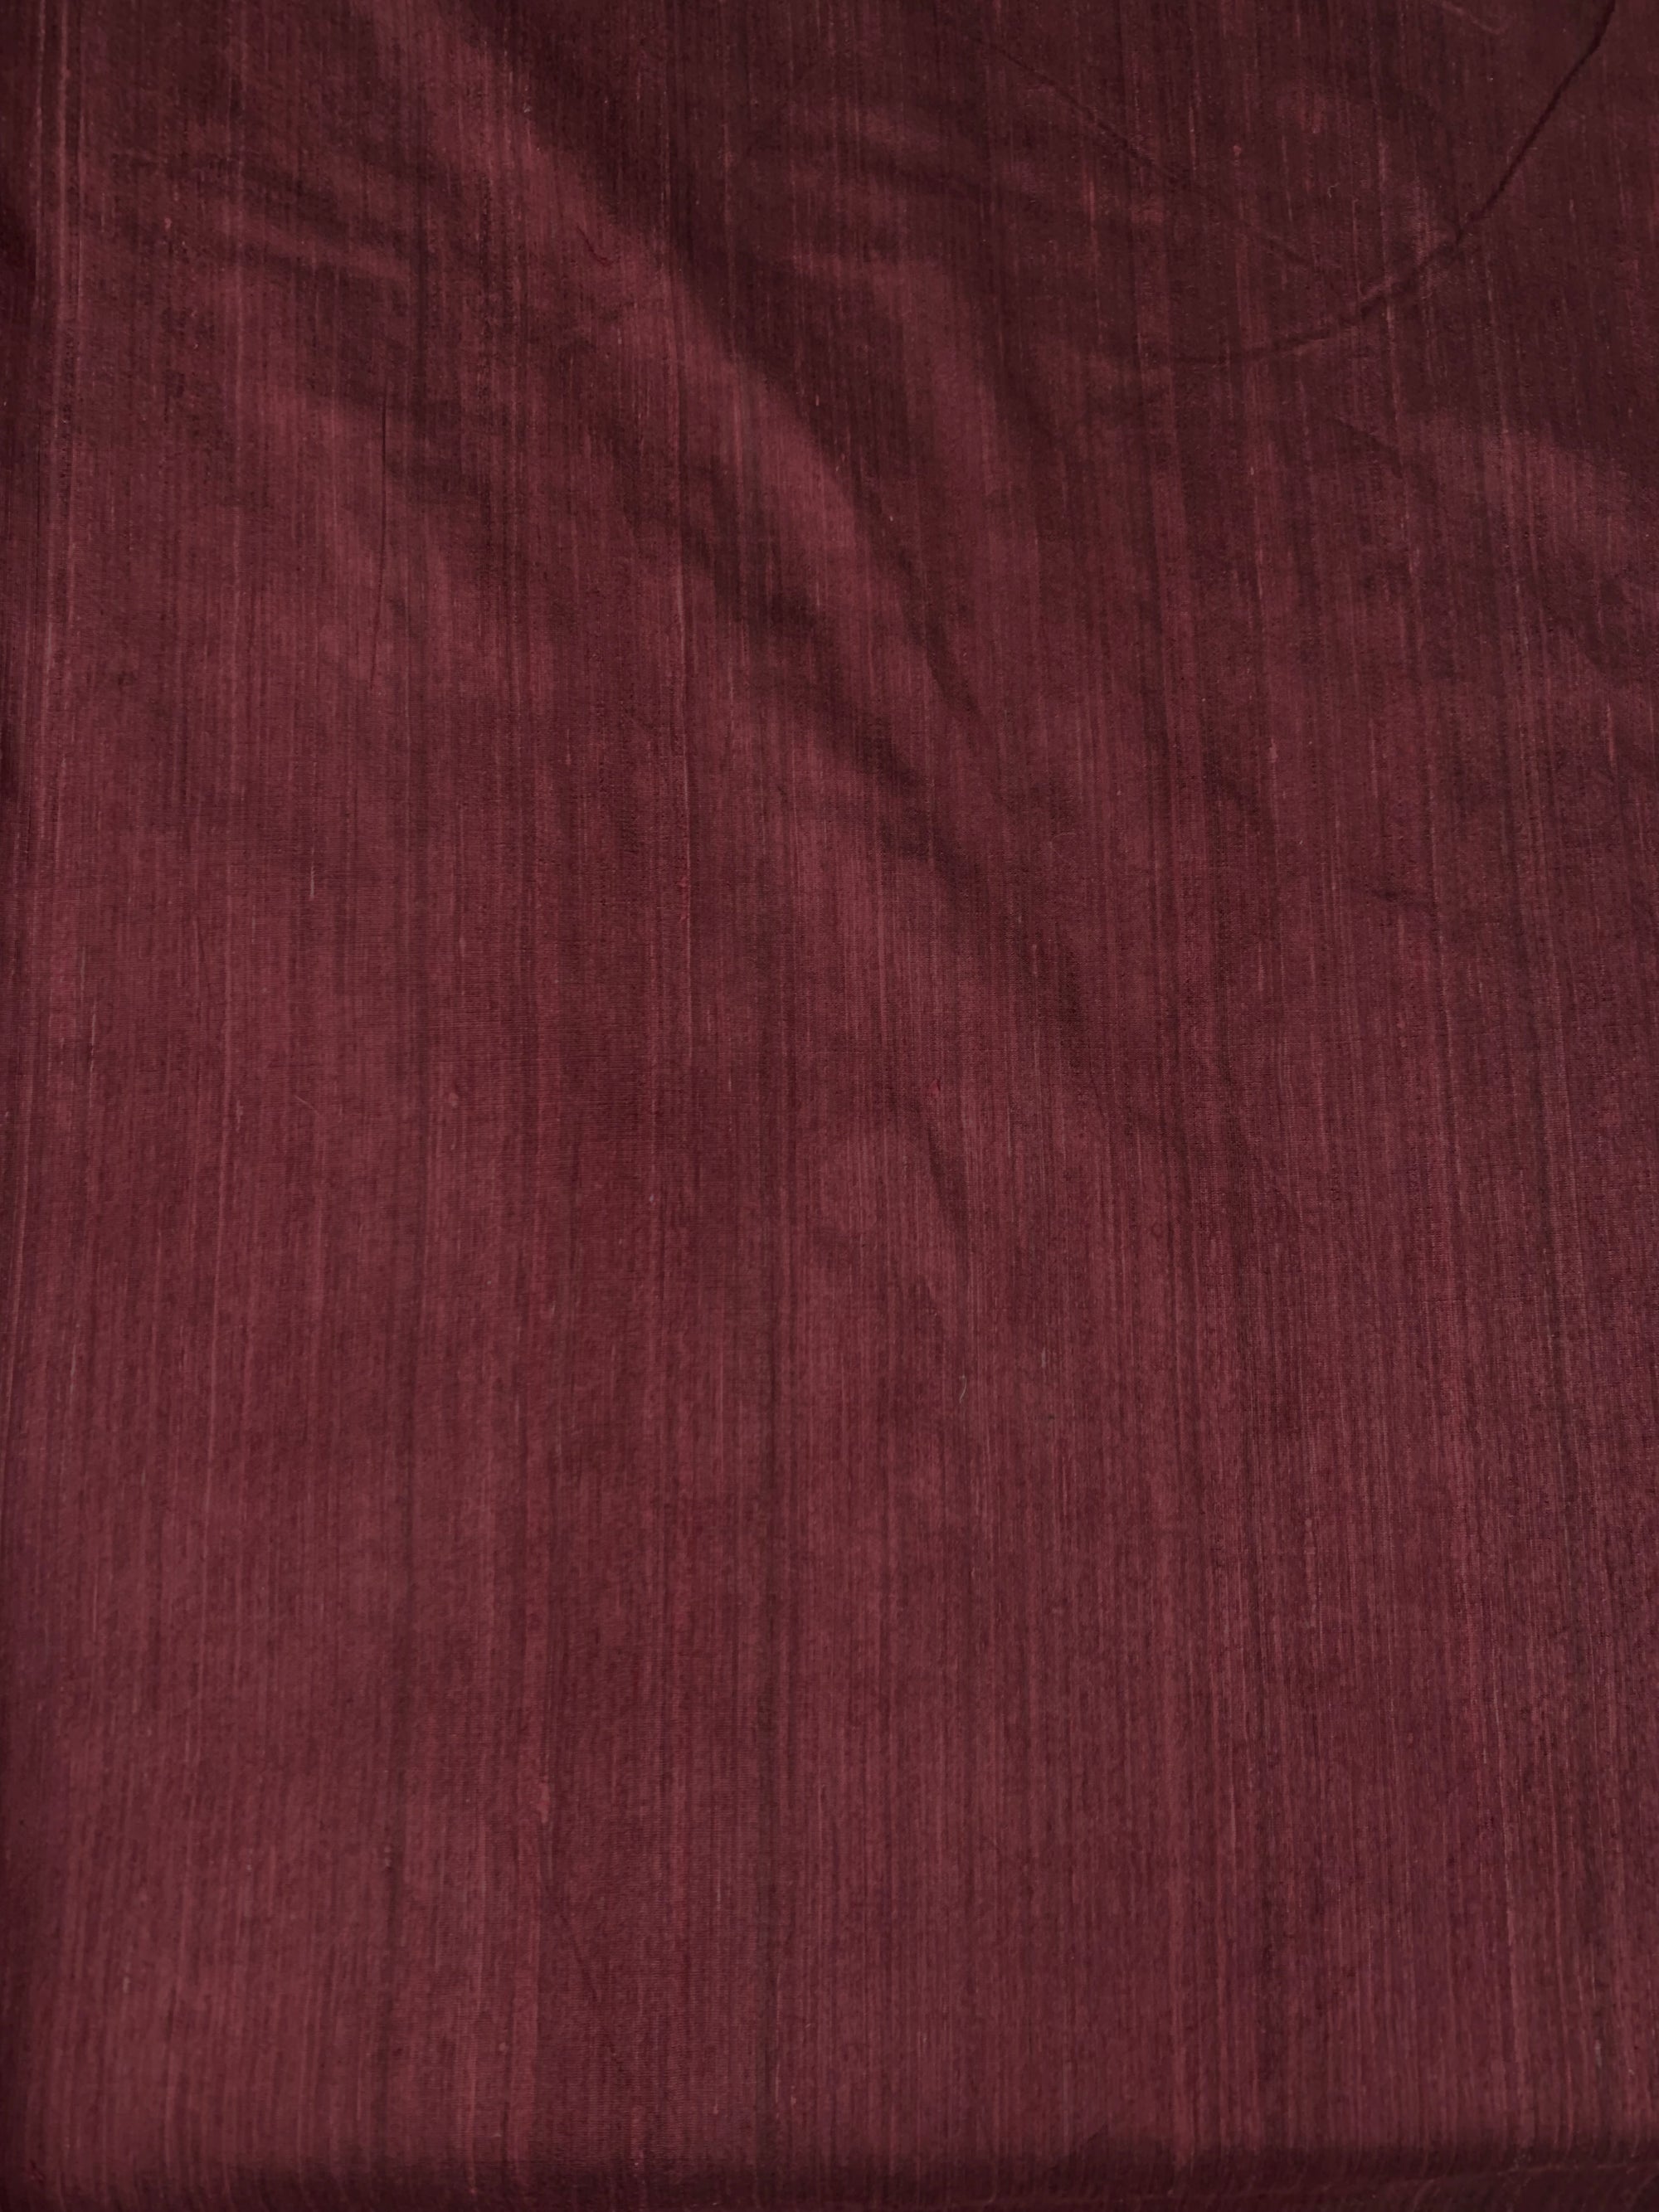 silk dupioni fabric color Wine.